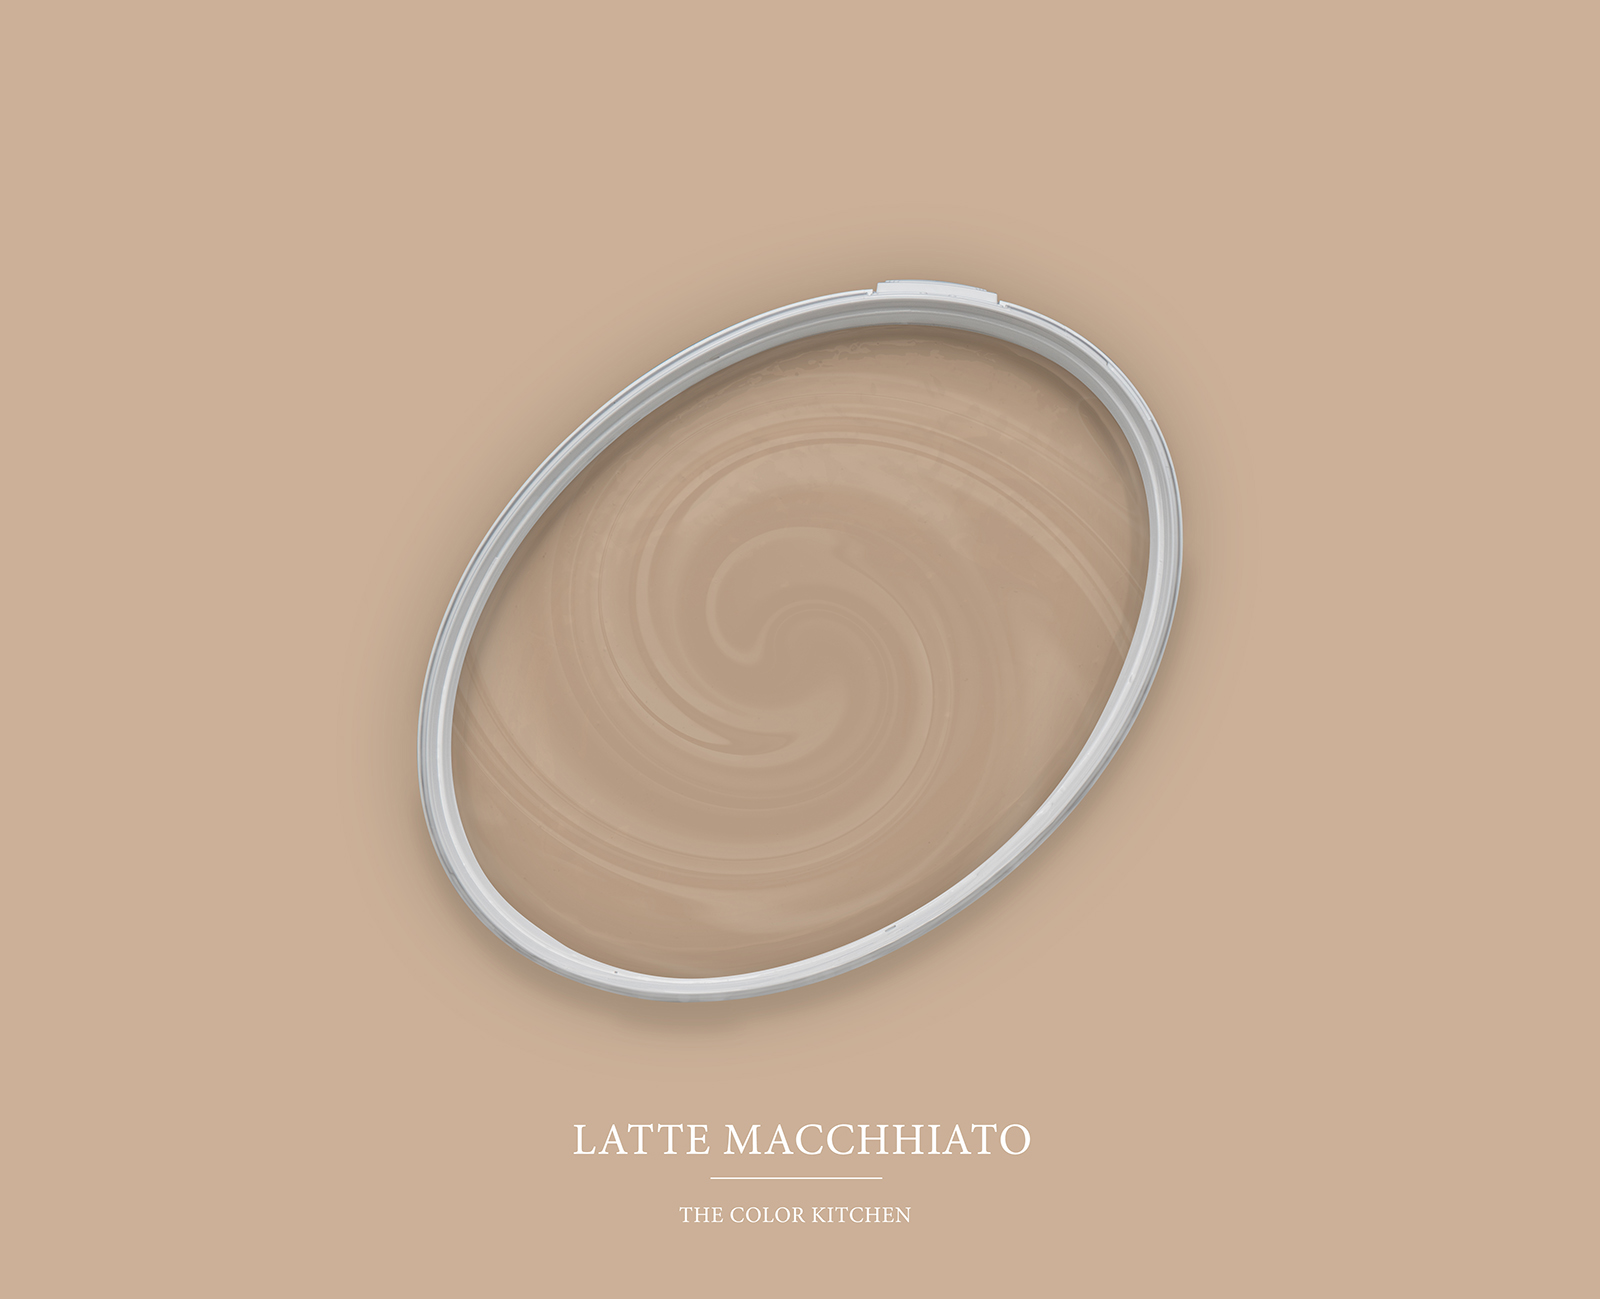 Wandfarbe TCK6010 »Latte Macchhiato« in natürlichem Beige – 2,5 Liter
